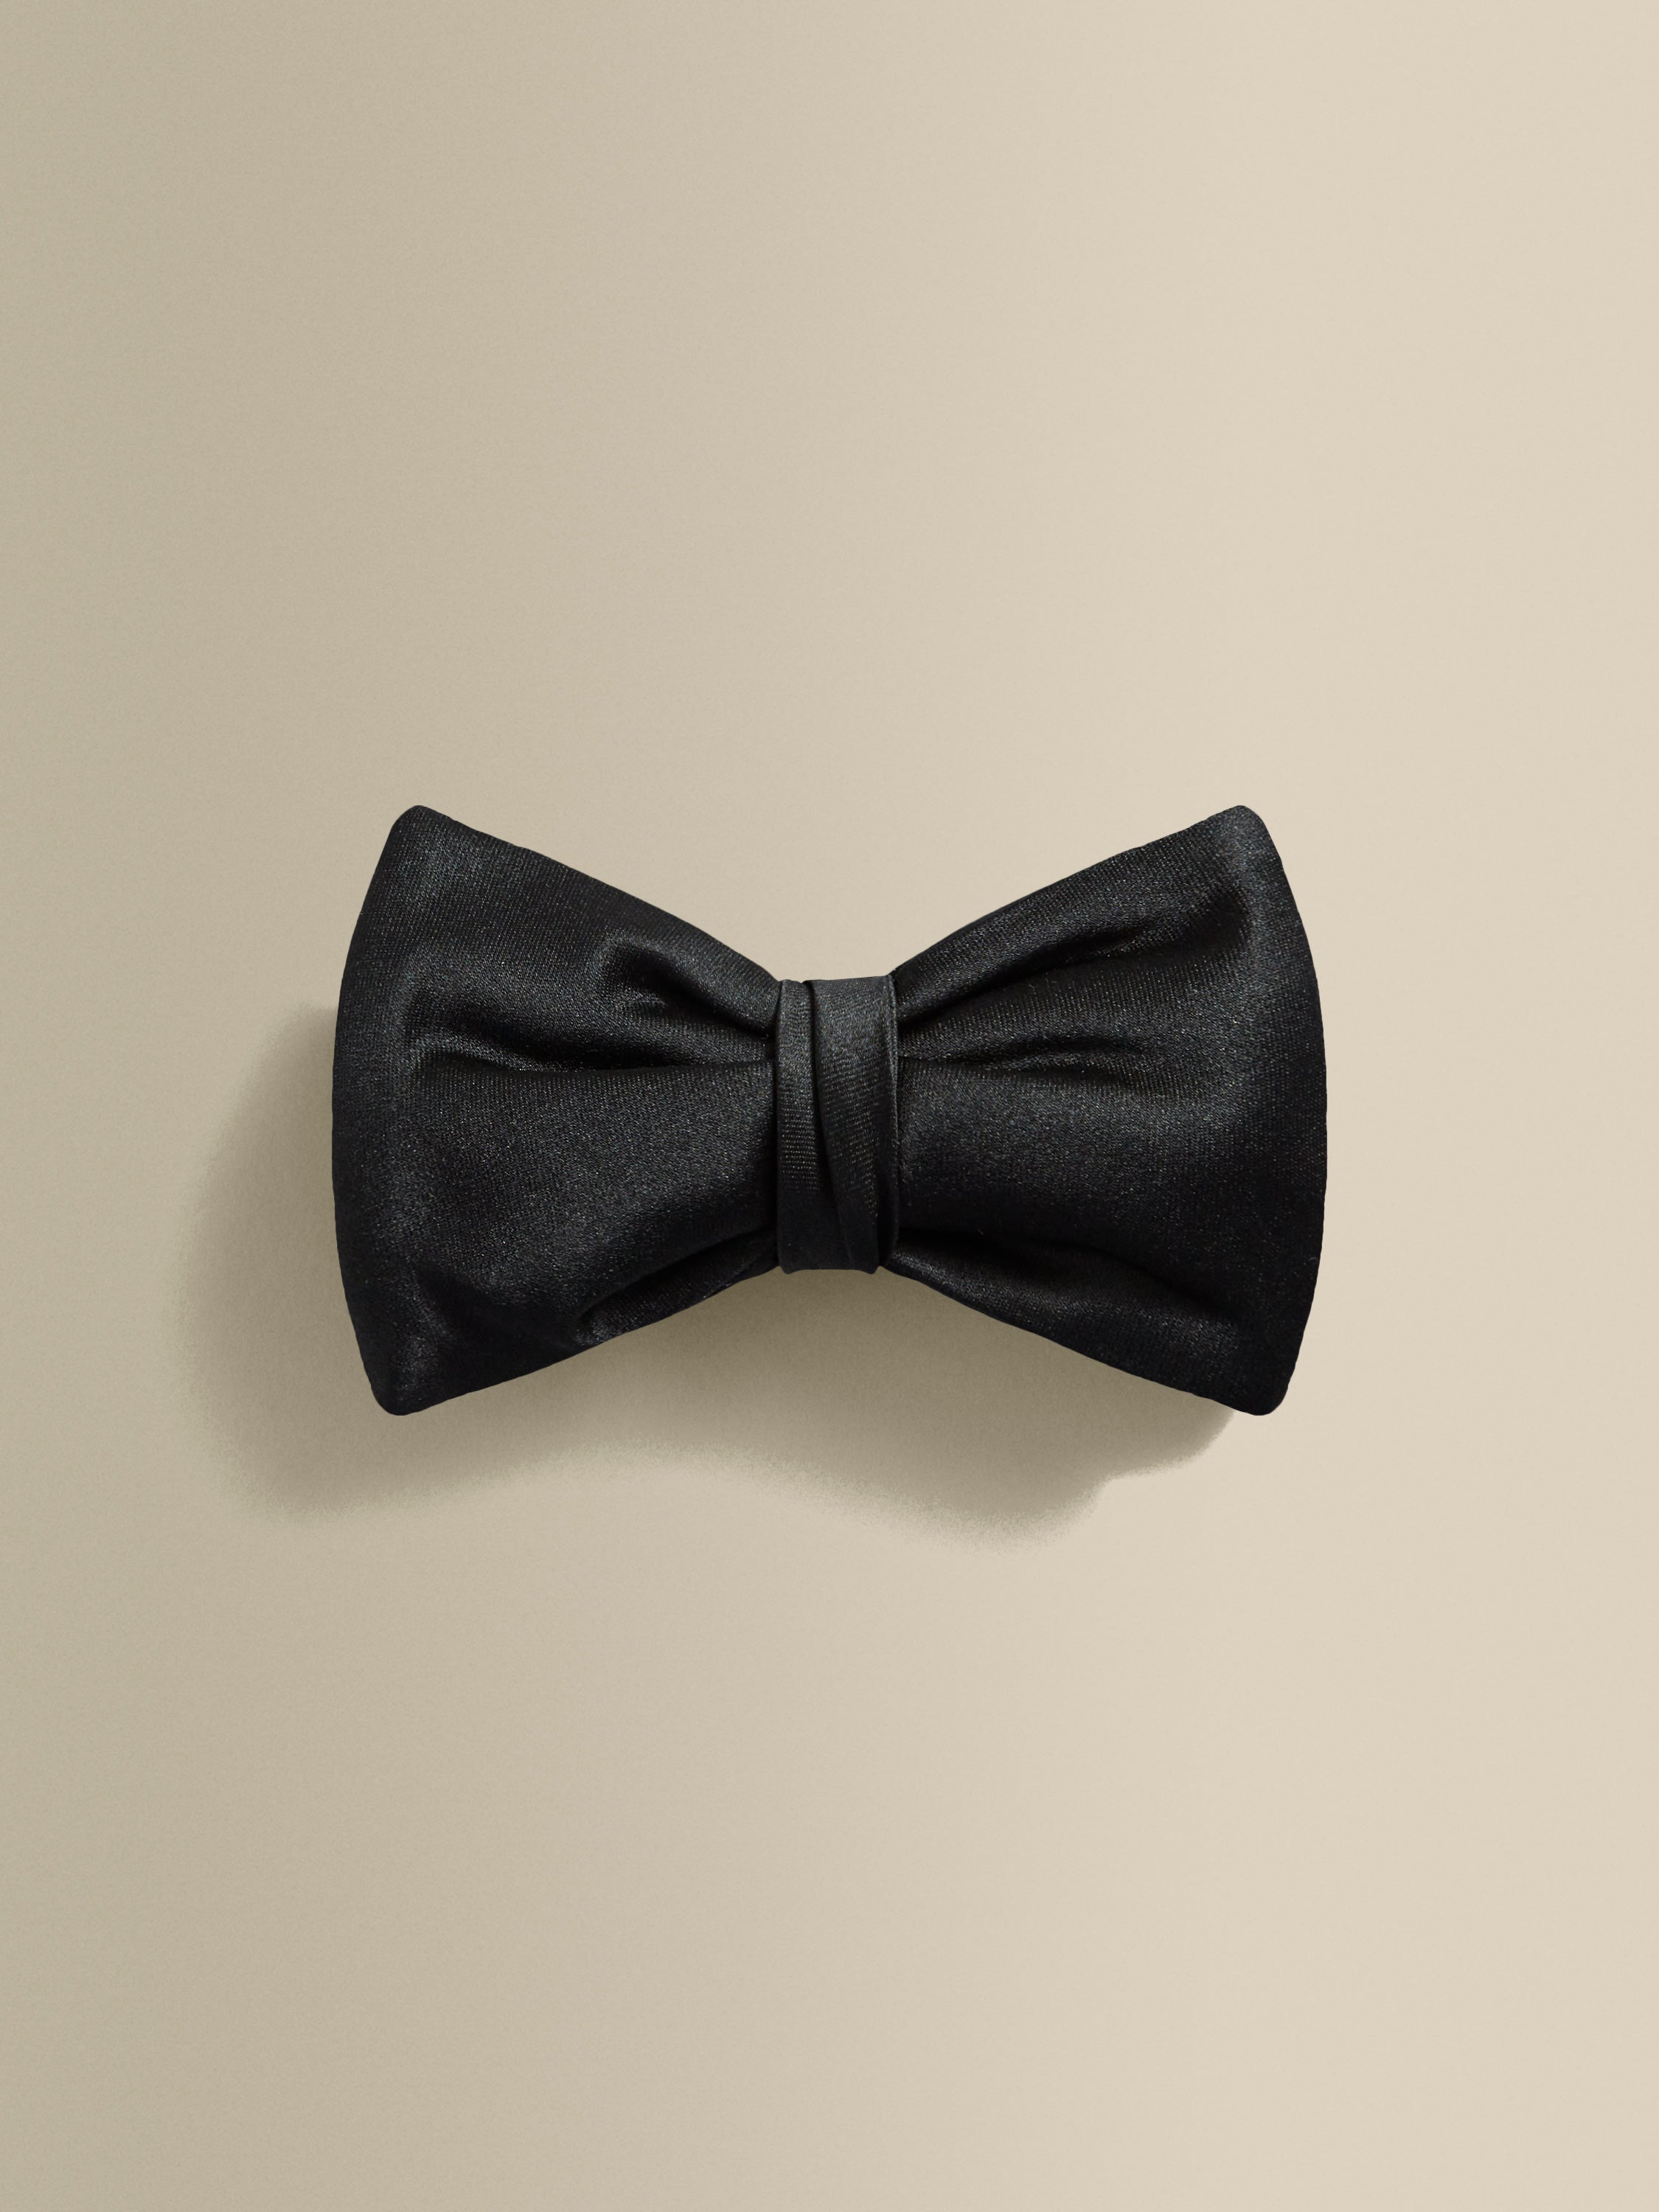 Silk Self Tie Bow Tie Black Product Image